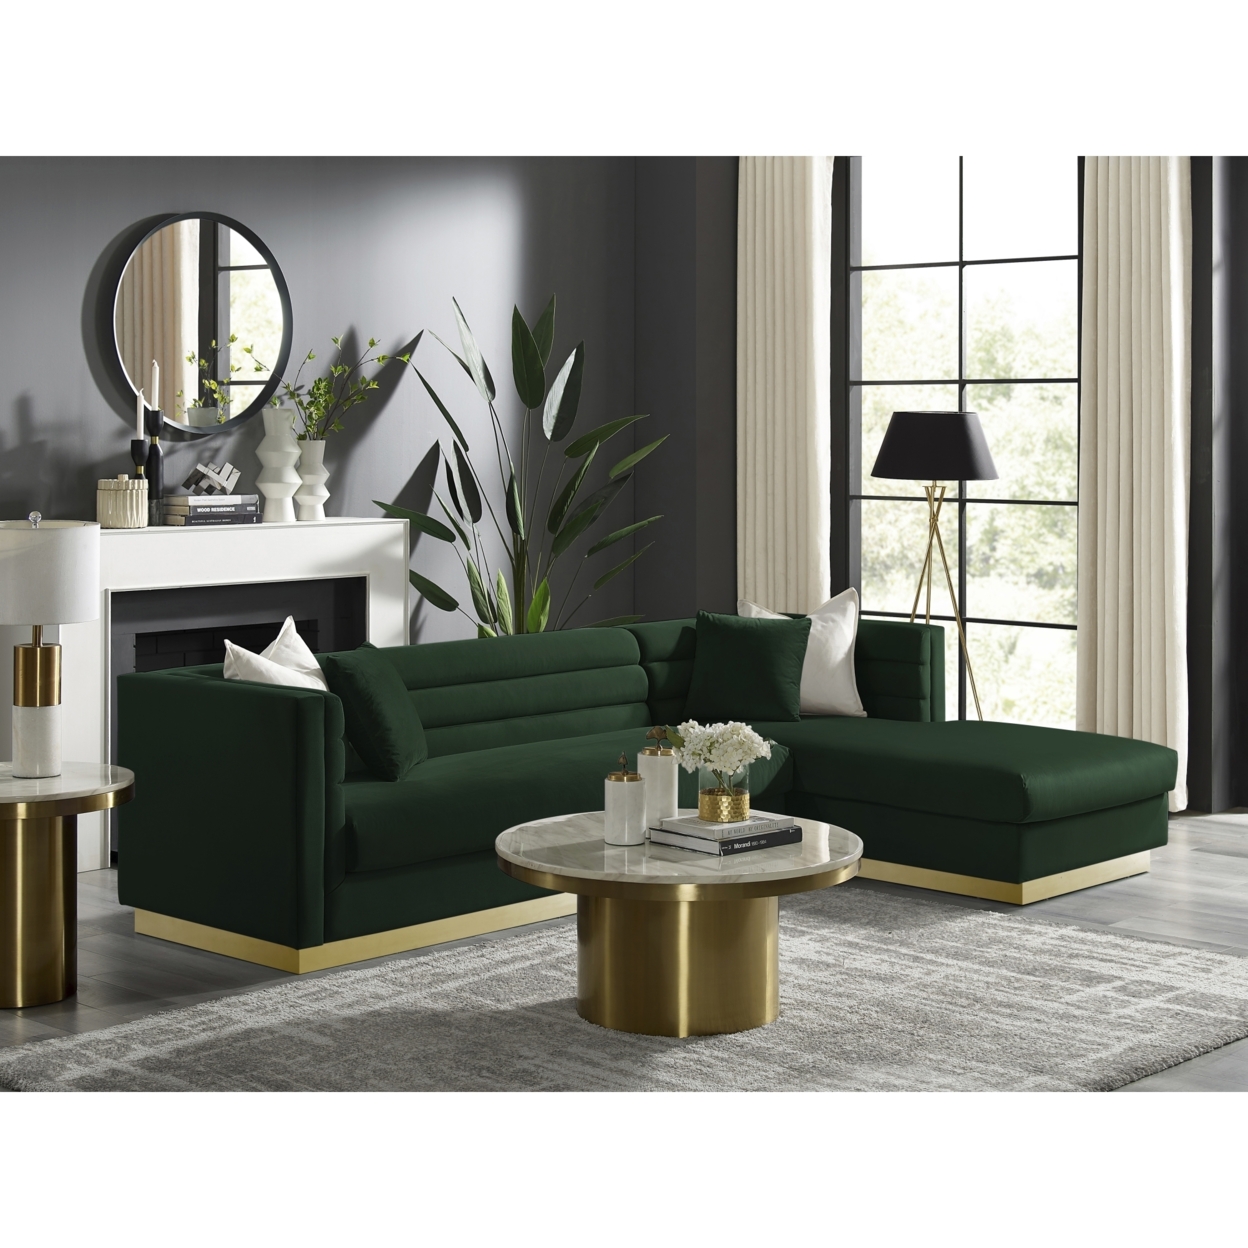 Aja Sofa-Upholstered-Modern-Metal Base, Square Arms-Horizontal Channel Tufting - hunter green